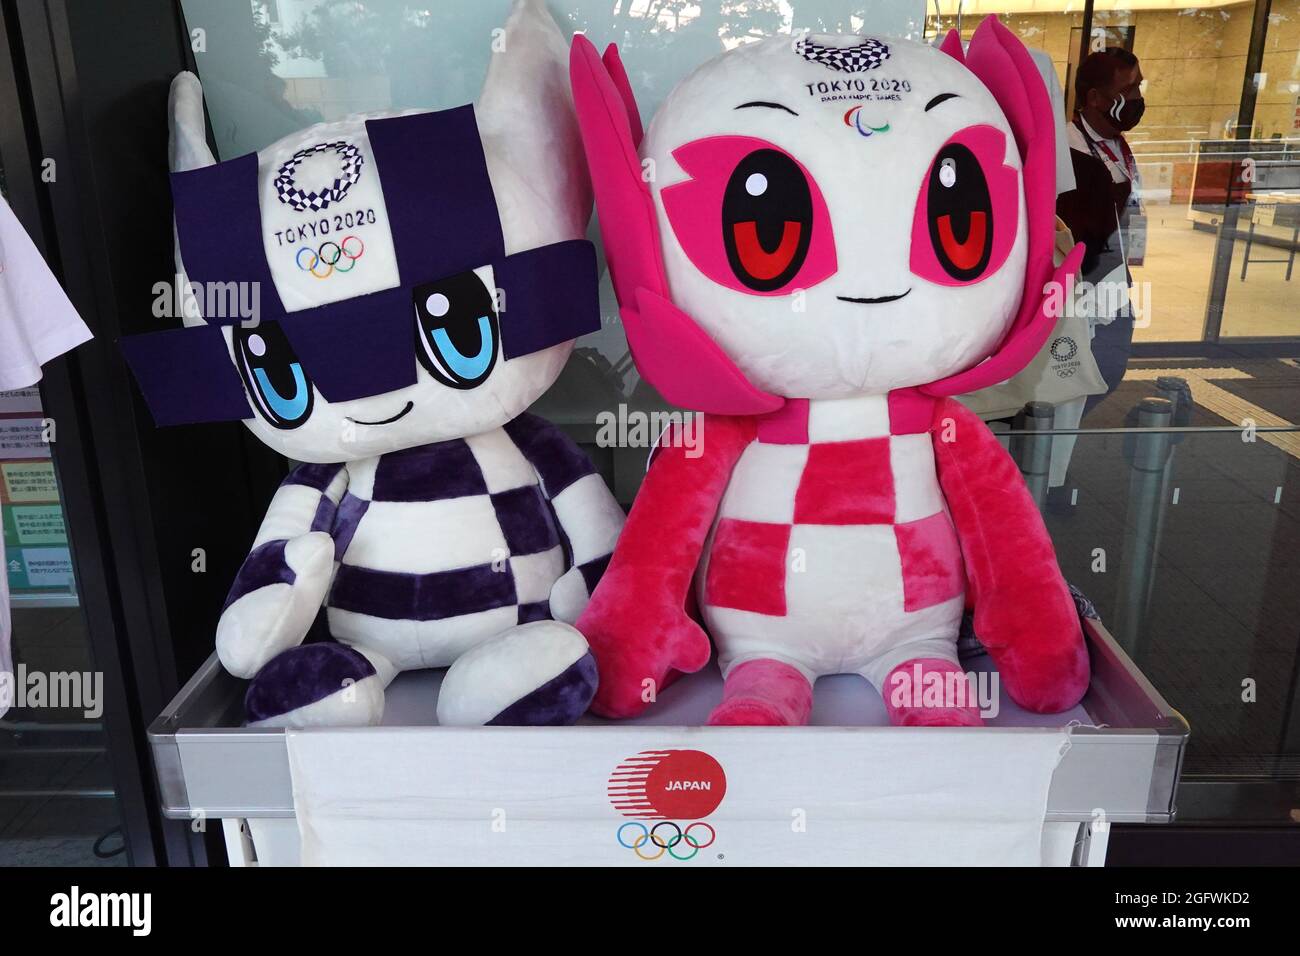 Tokyo 2020 Olympic Paralympic Mascot Figure MIRAITOWA SOMEITY Japan 2 set Kawaii 